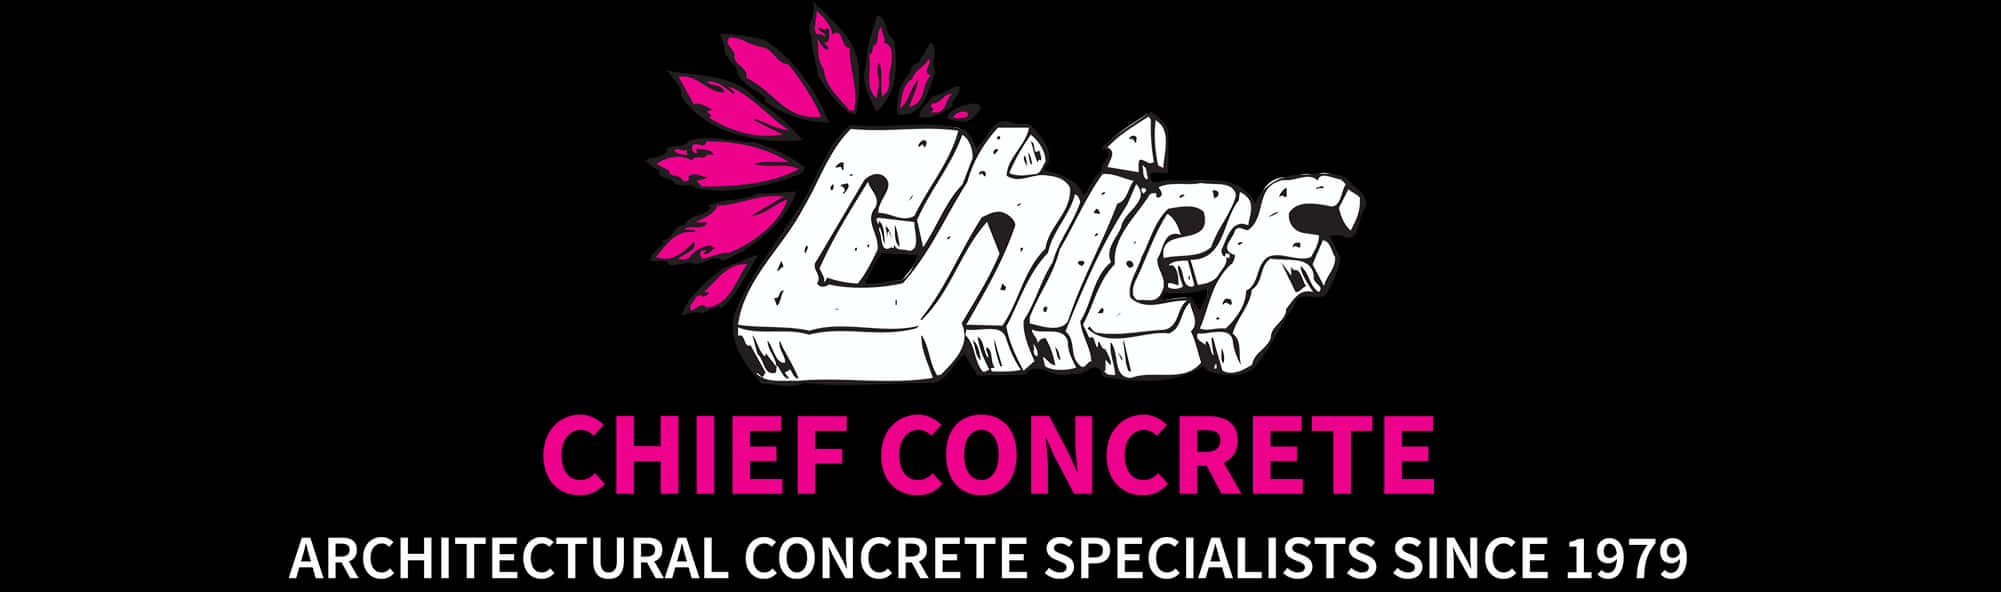 Chief Concrete Company Logo PNG image